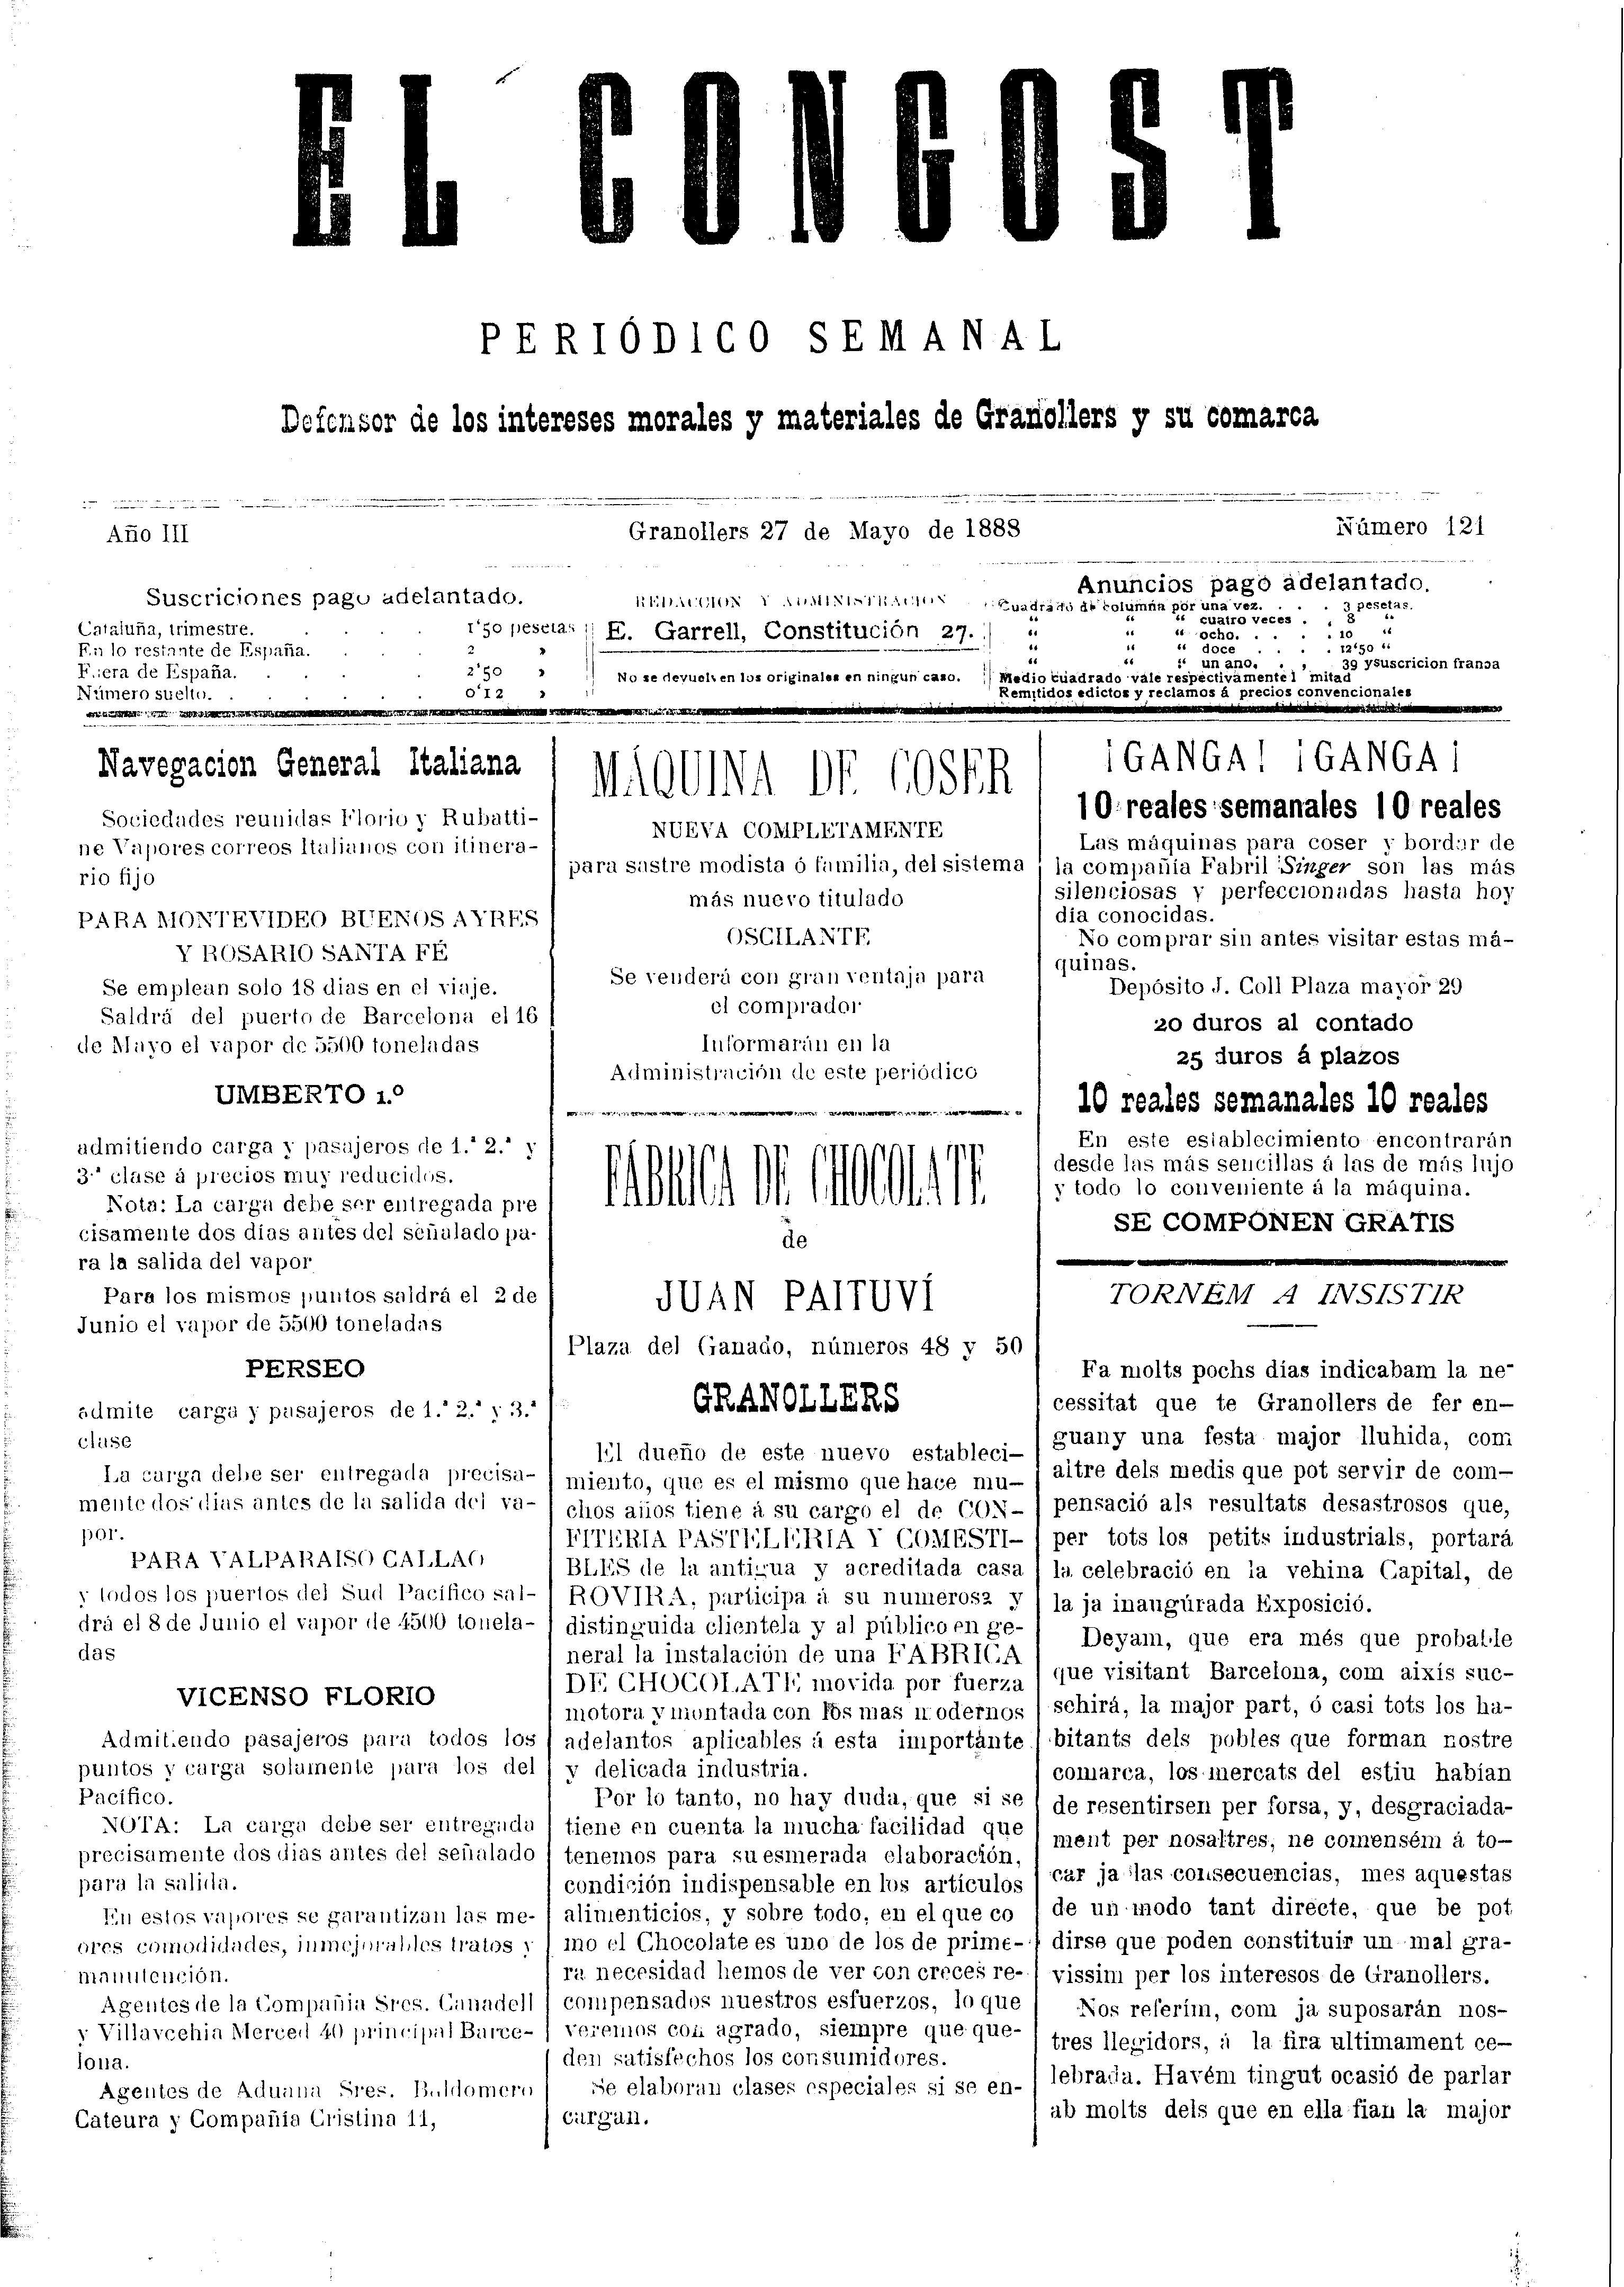 El Congost, 27/5/1888 [Exemplar]